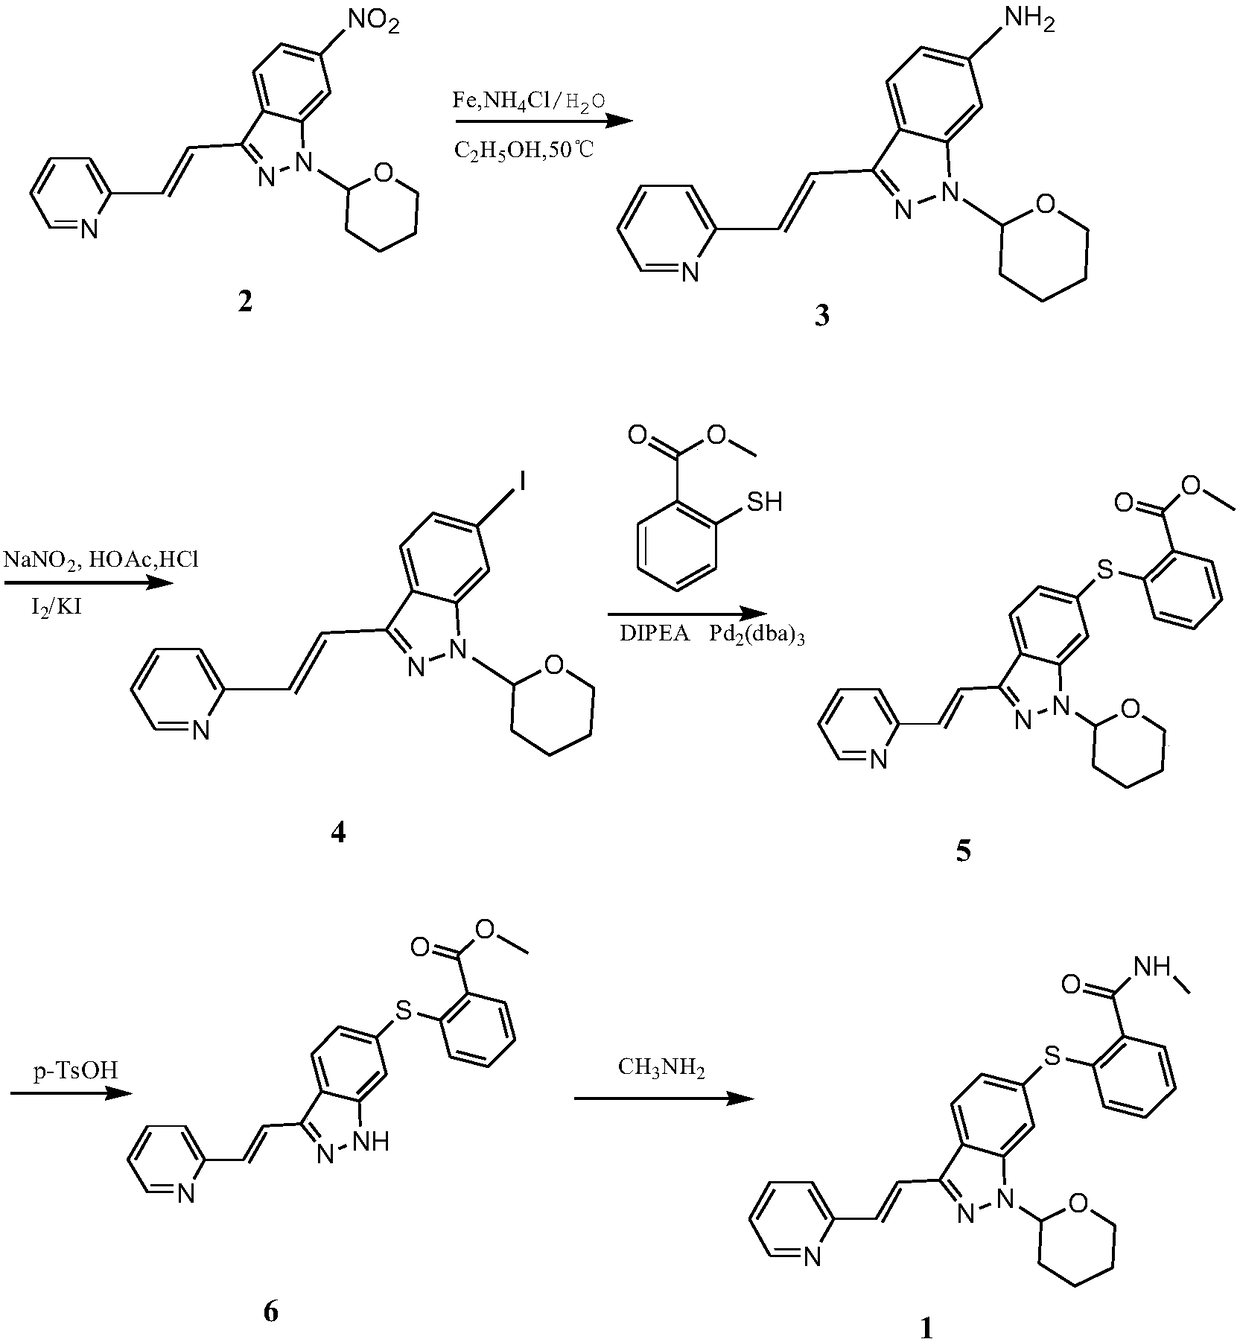 Method for synthesizing axitinib